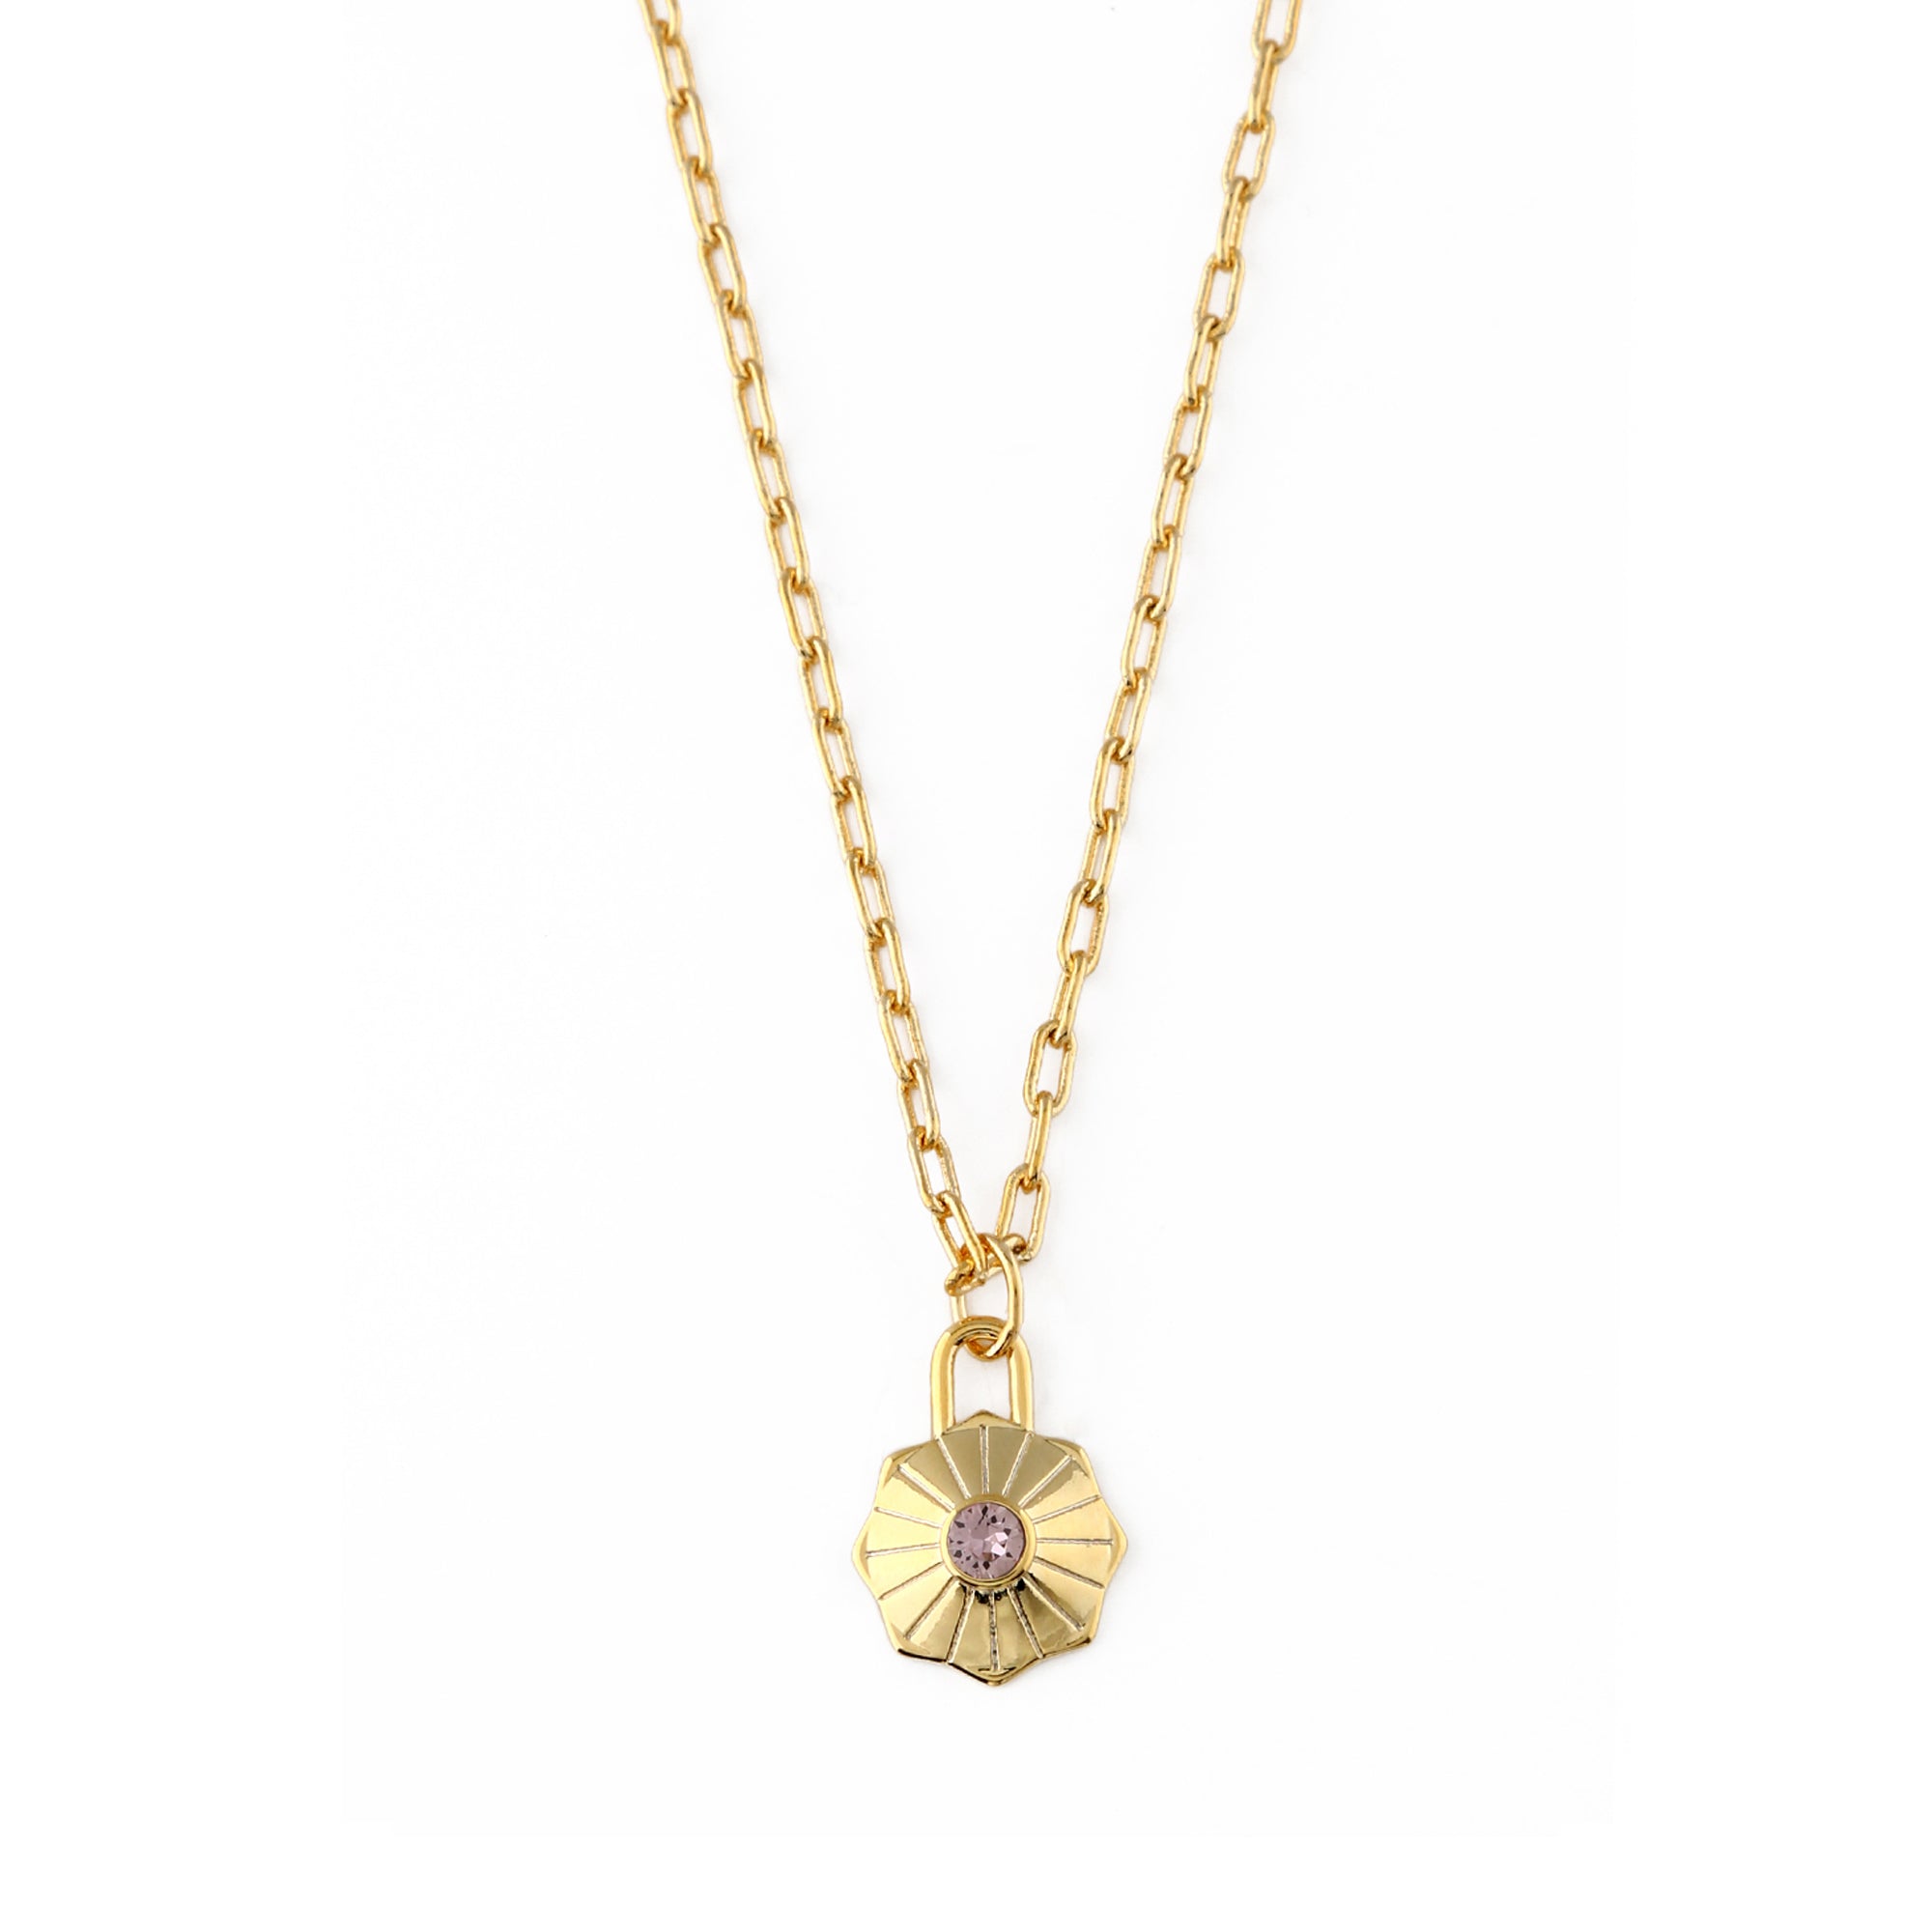 June Birthstone Necklace Made With Swarovski Crystals - Gold - Orelia London